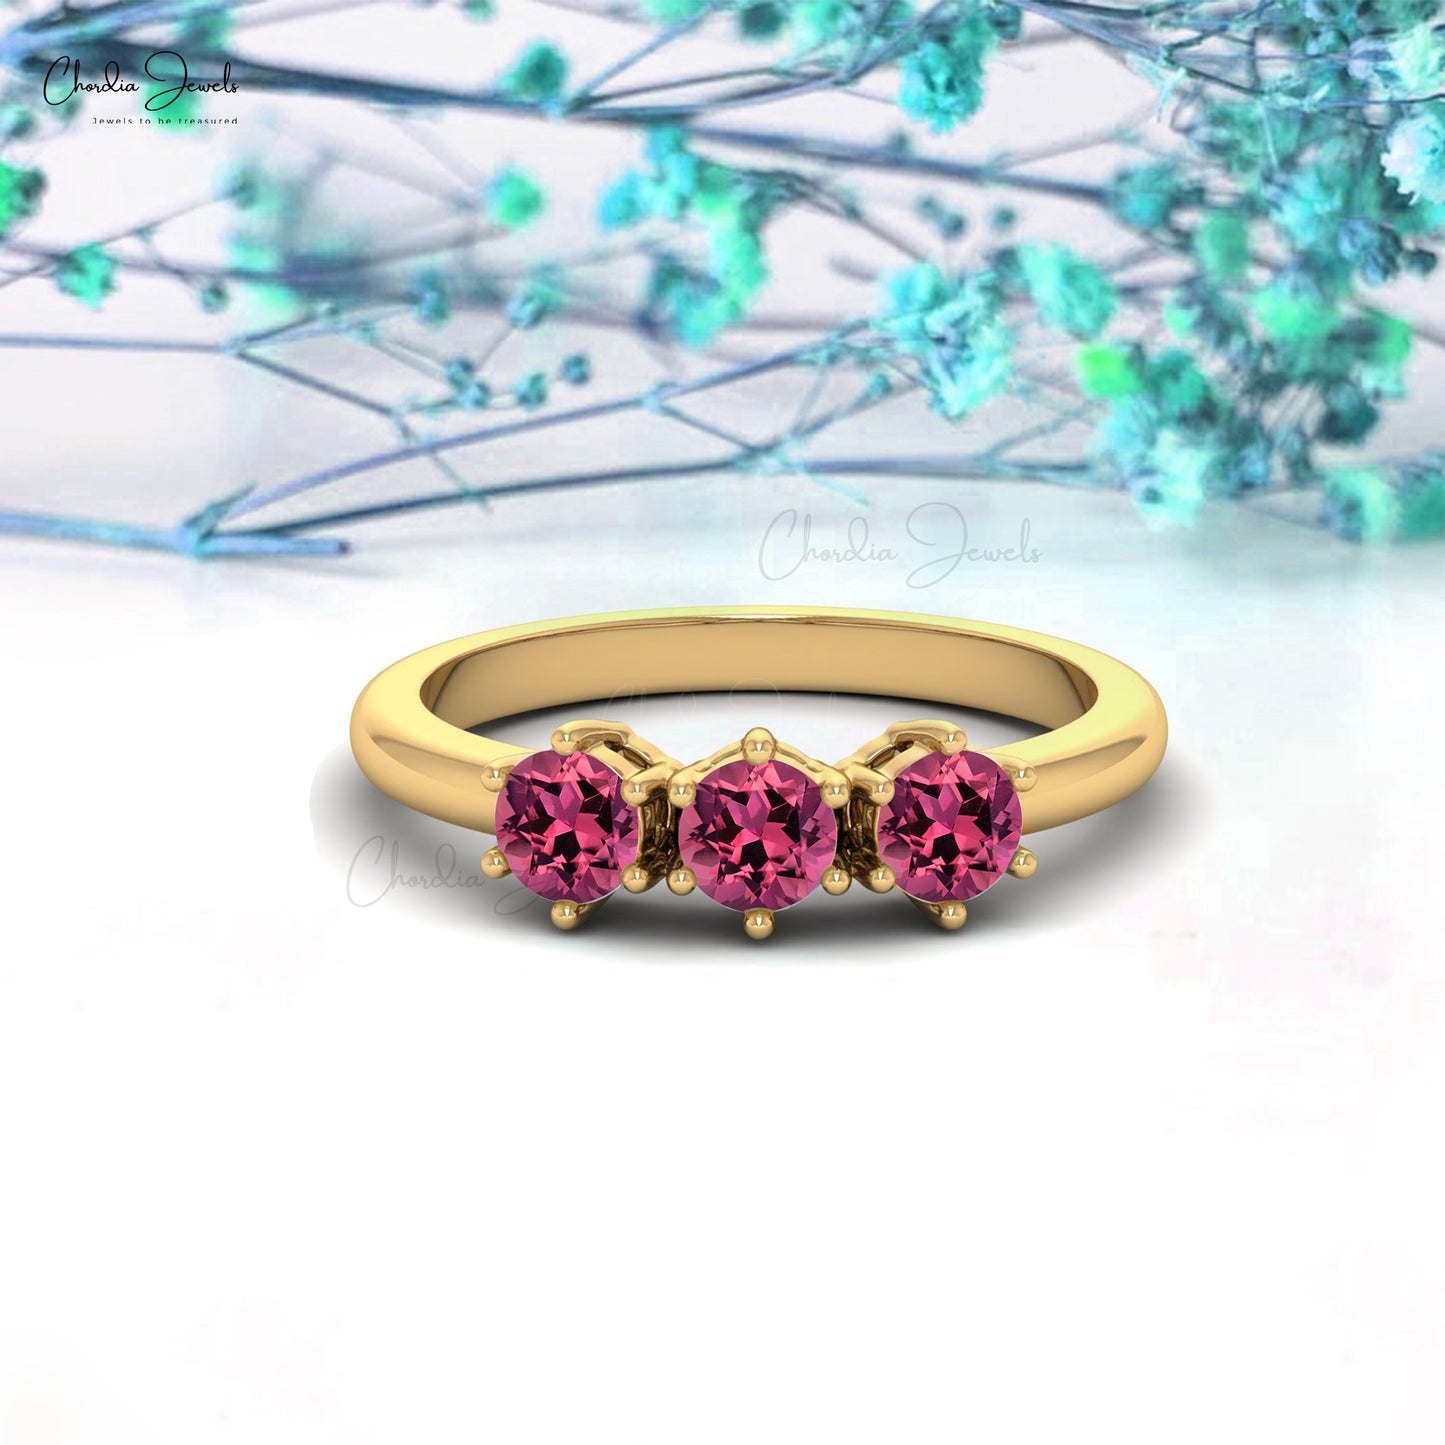 Natural Pink Tourmaline Proposal Ring 14k Real Gold Three Stone Ring 4mm Brilliant Round Cut Gemstone Hallmarked Classic Jewelry